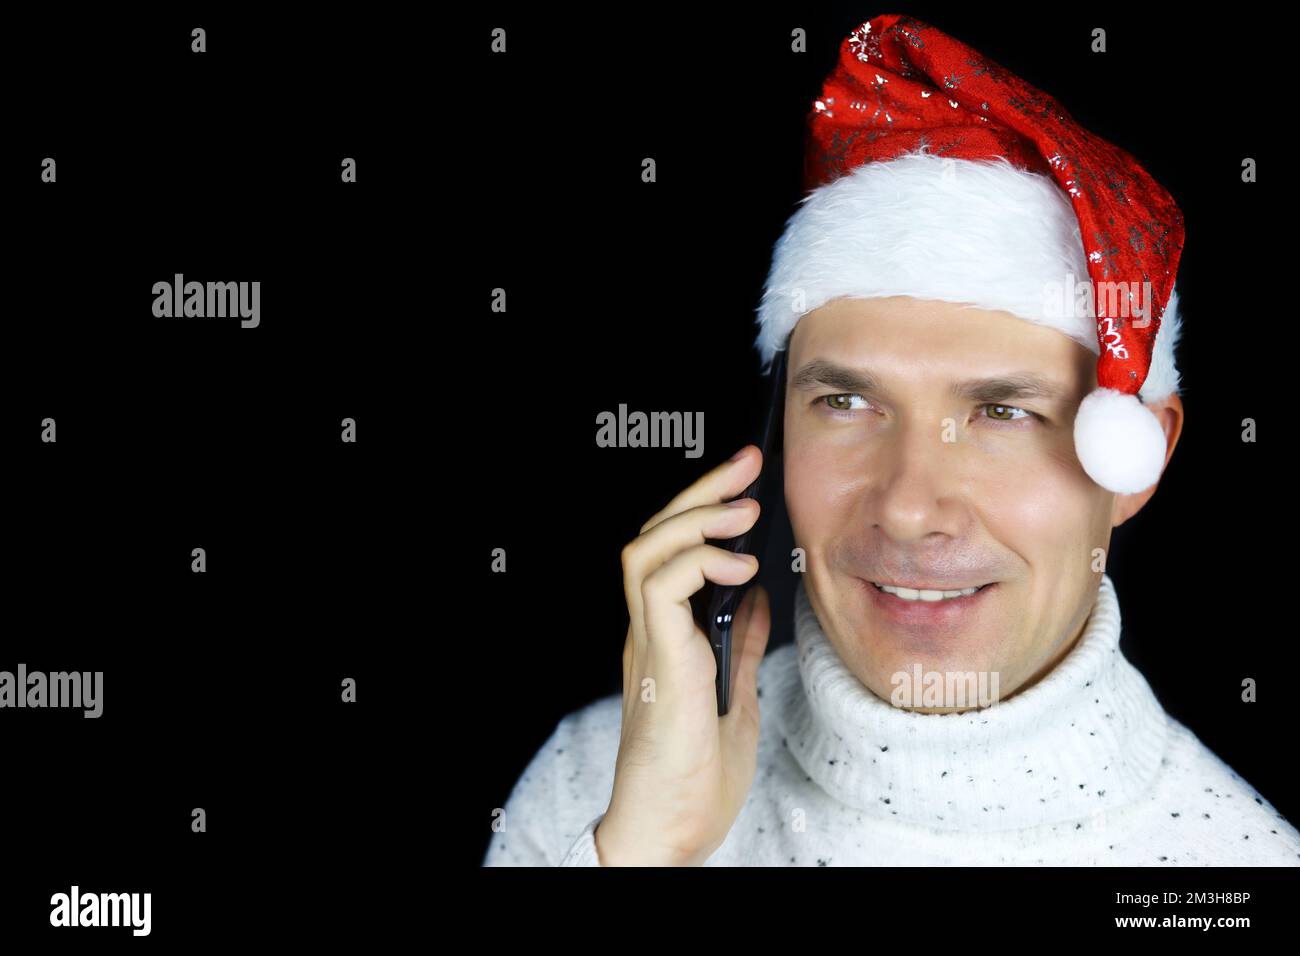 Christmas mobile phone santa hat -Fotos und -Bildmaterial in hoher  Auflösung – Alamy